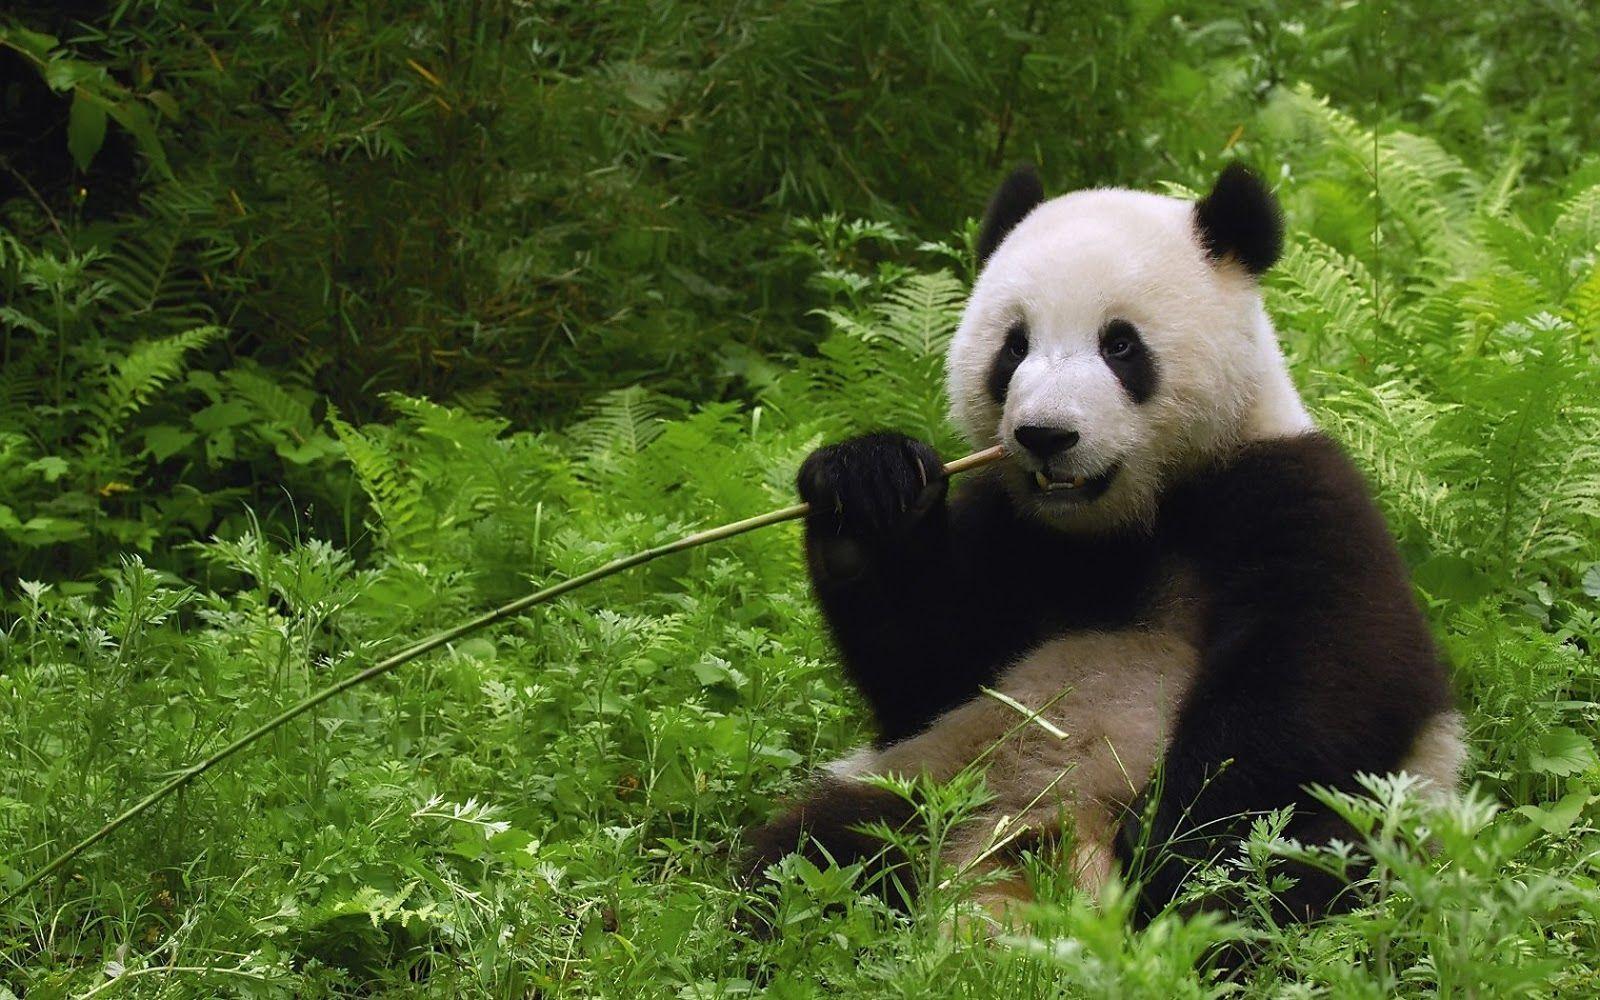 Panda Bear Wallpaper Image & Picture